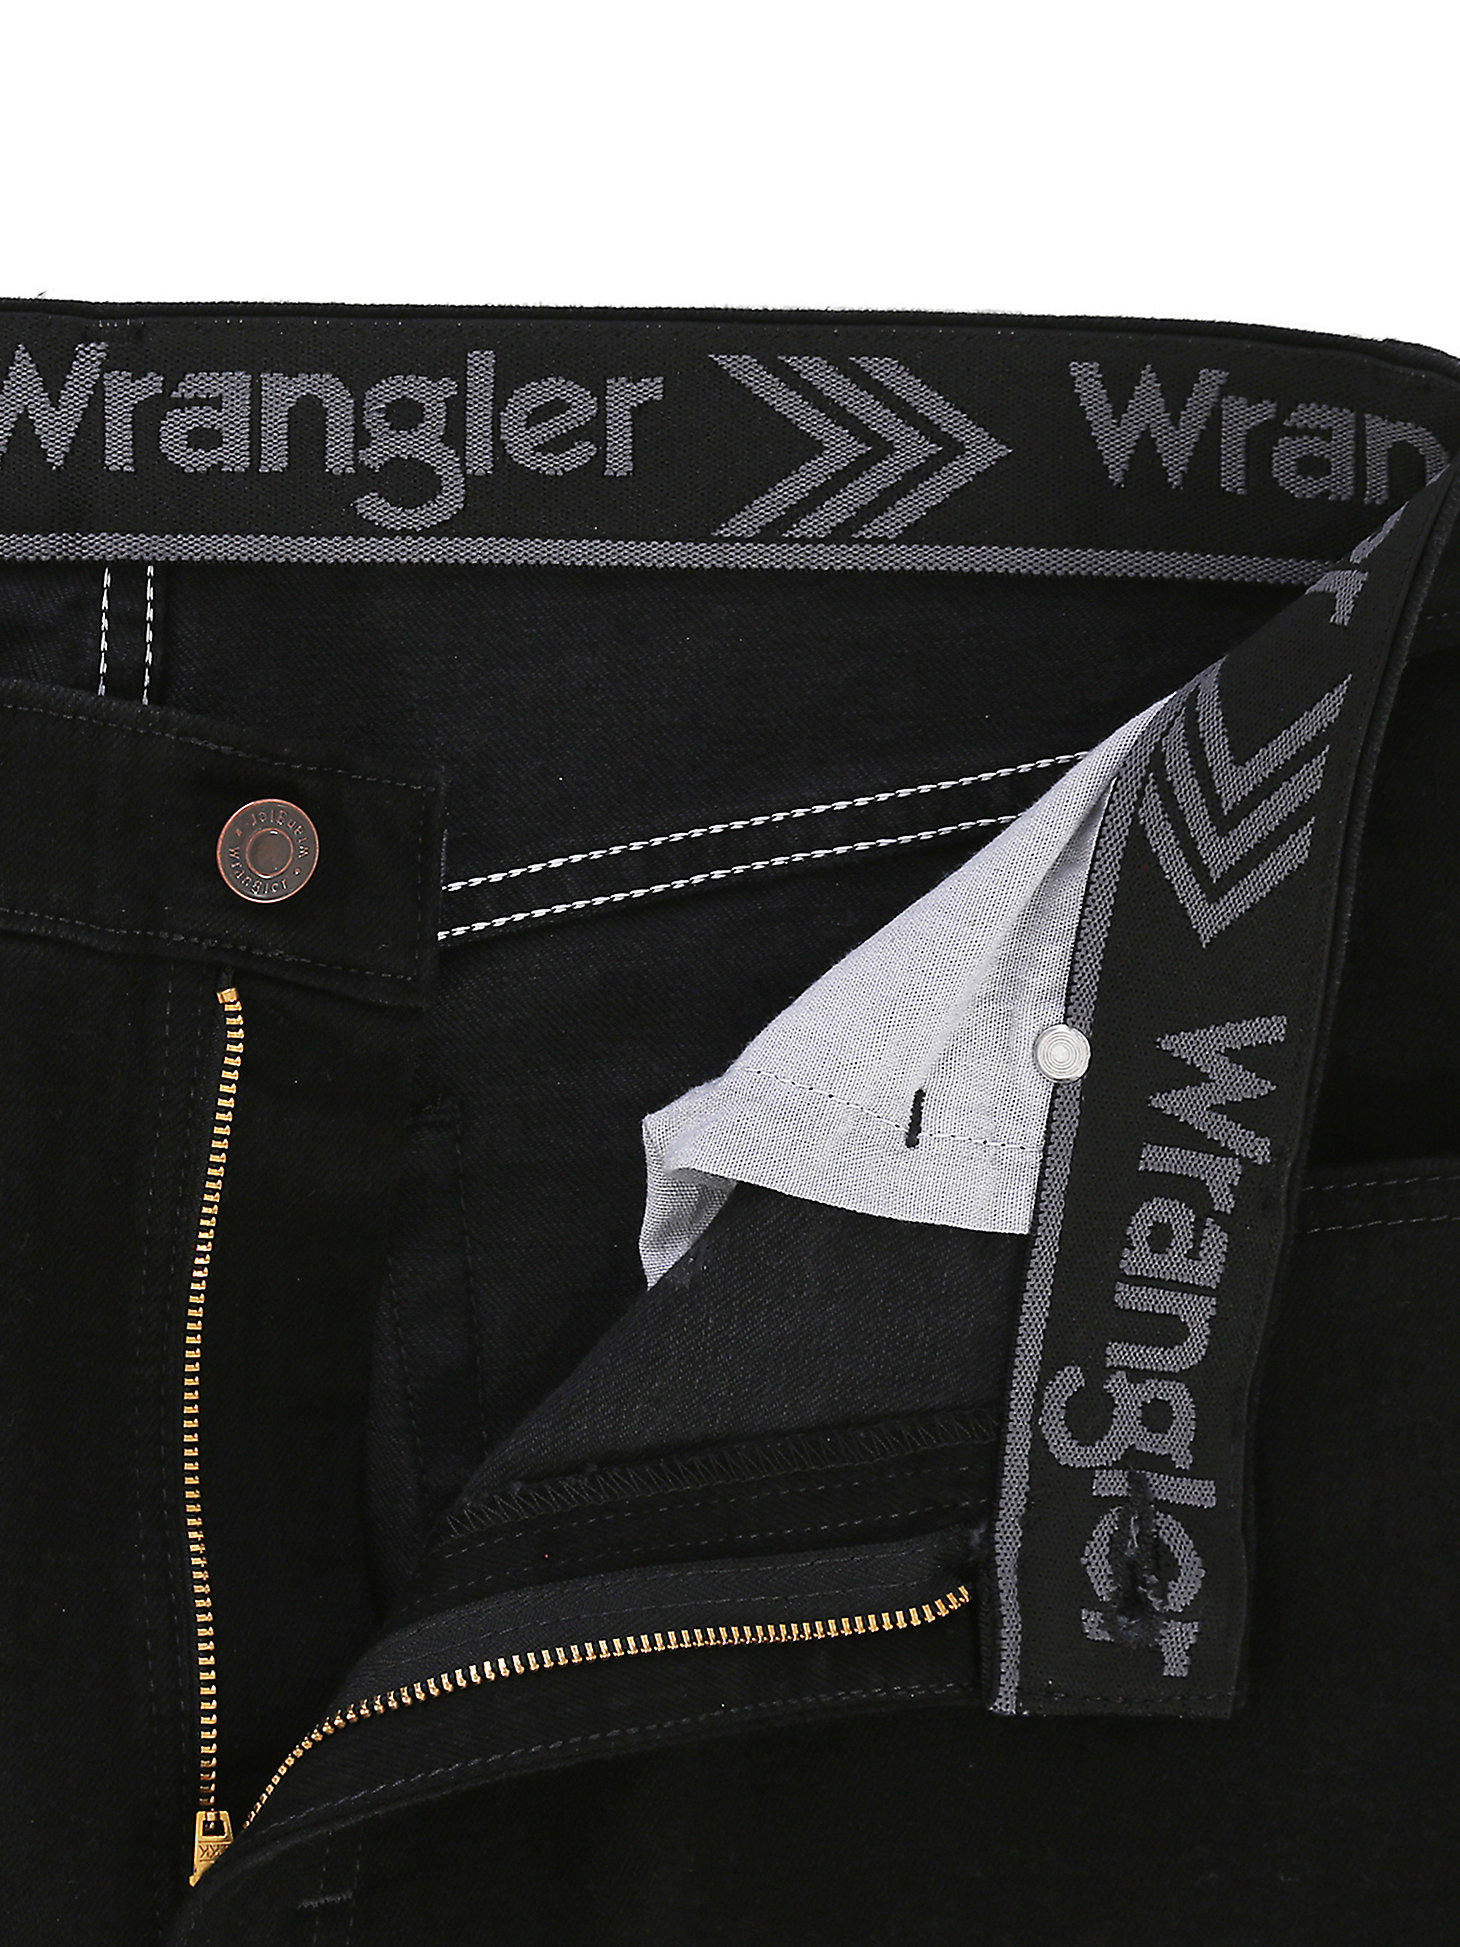 Wrangler® Five Star Premium Performance Series Regular Fit Jean in Black alternative view 4